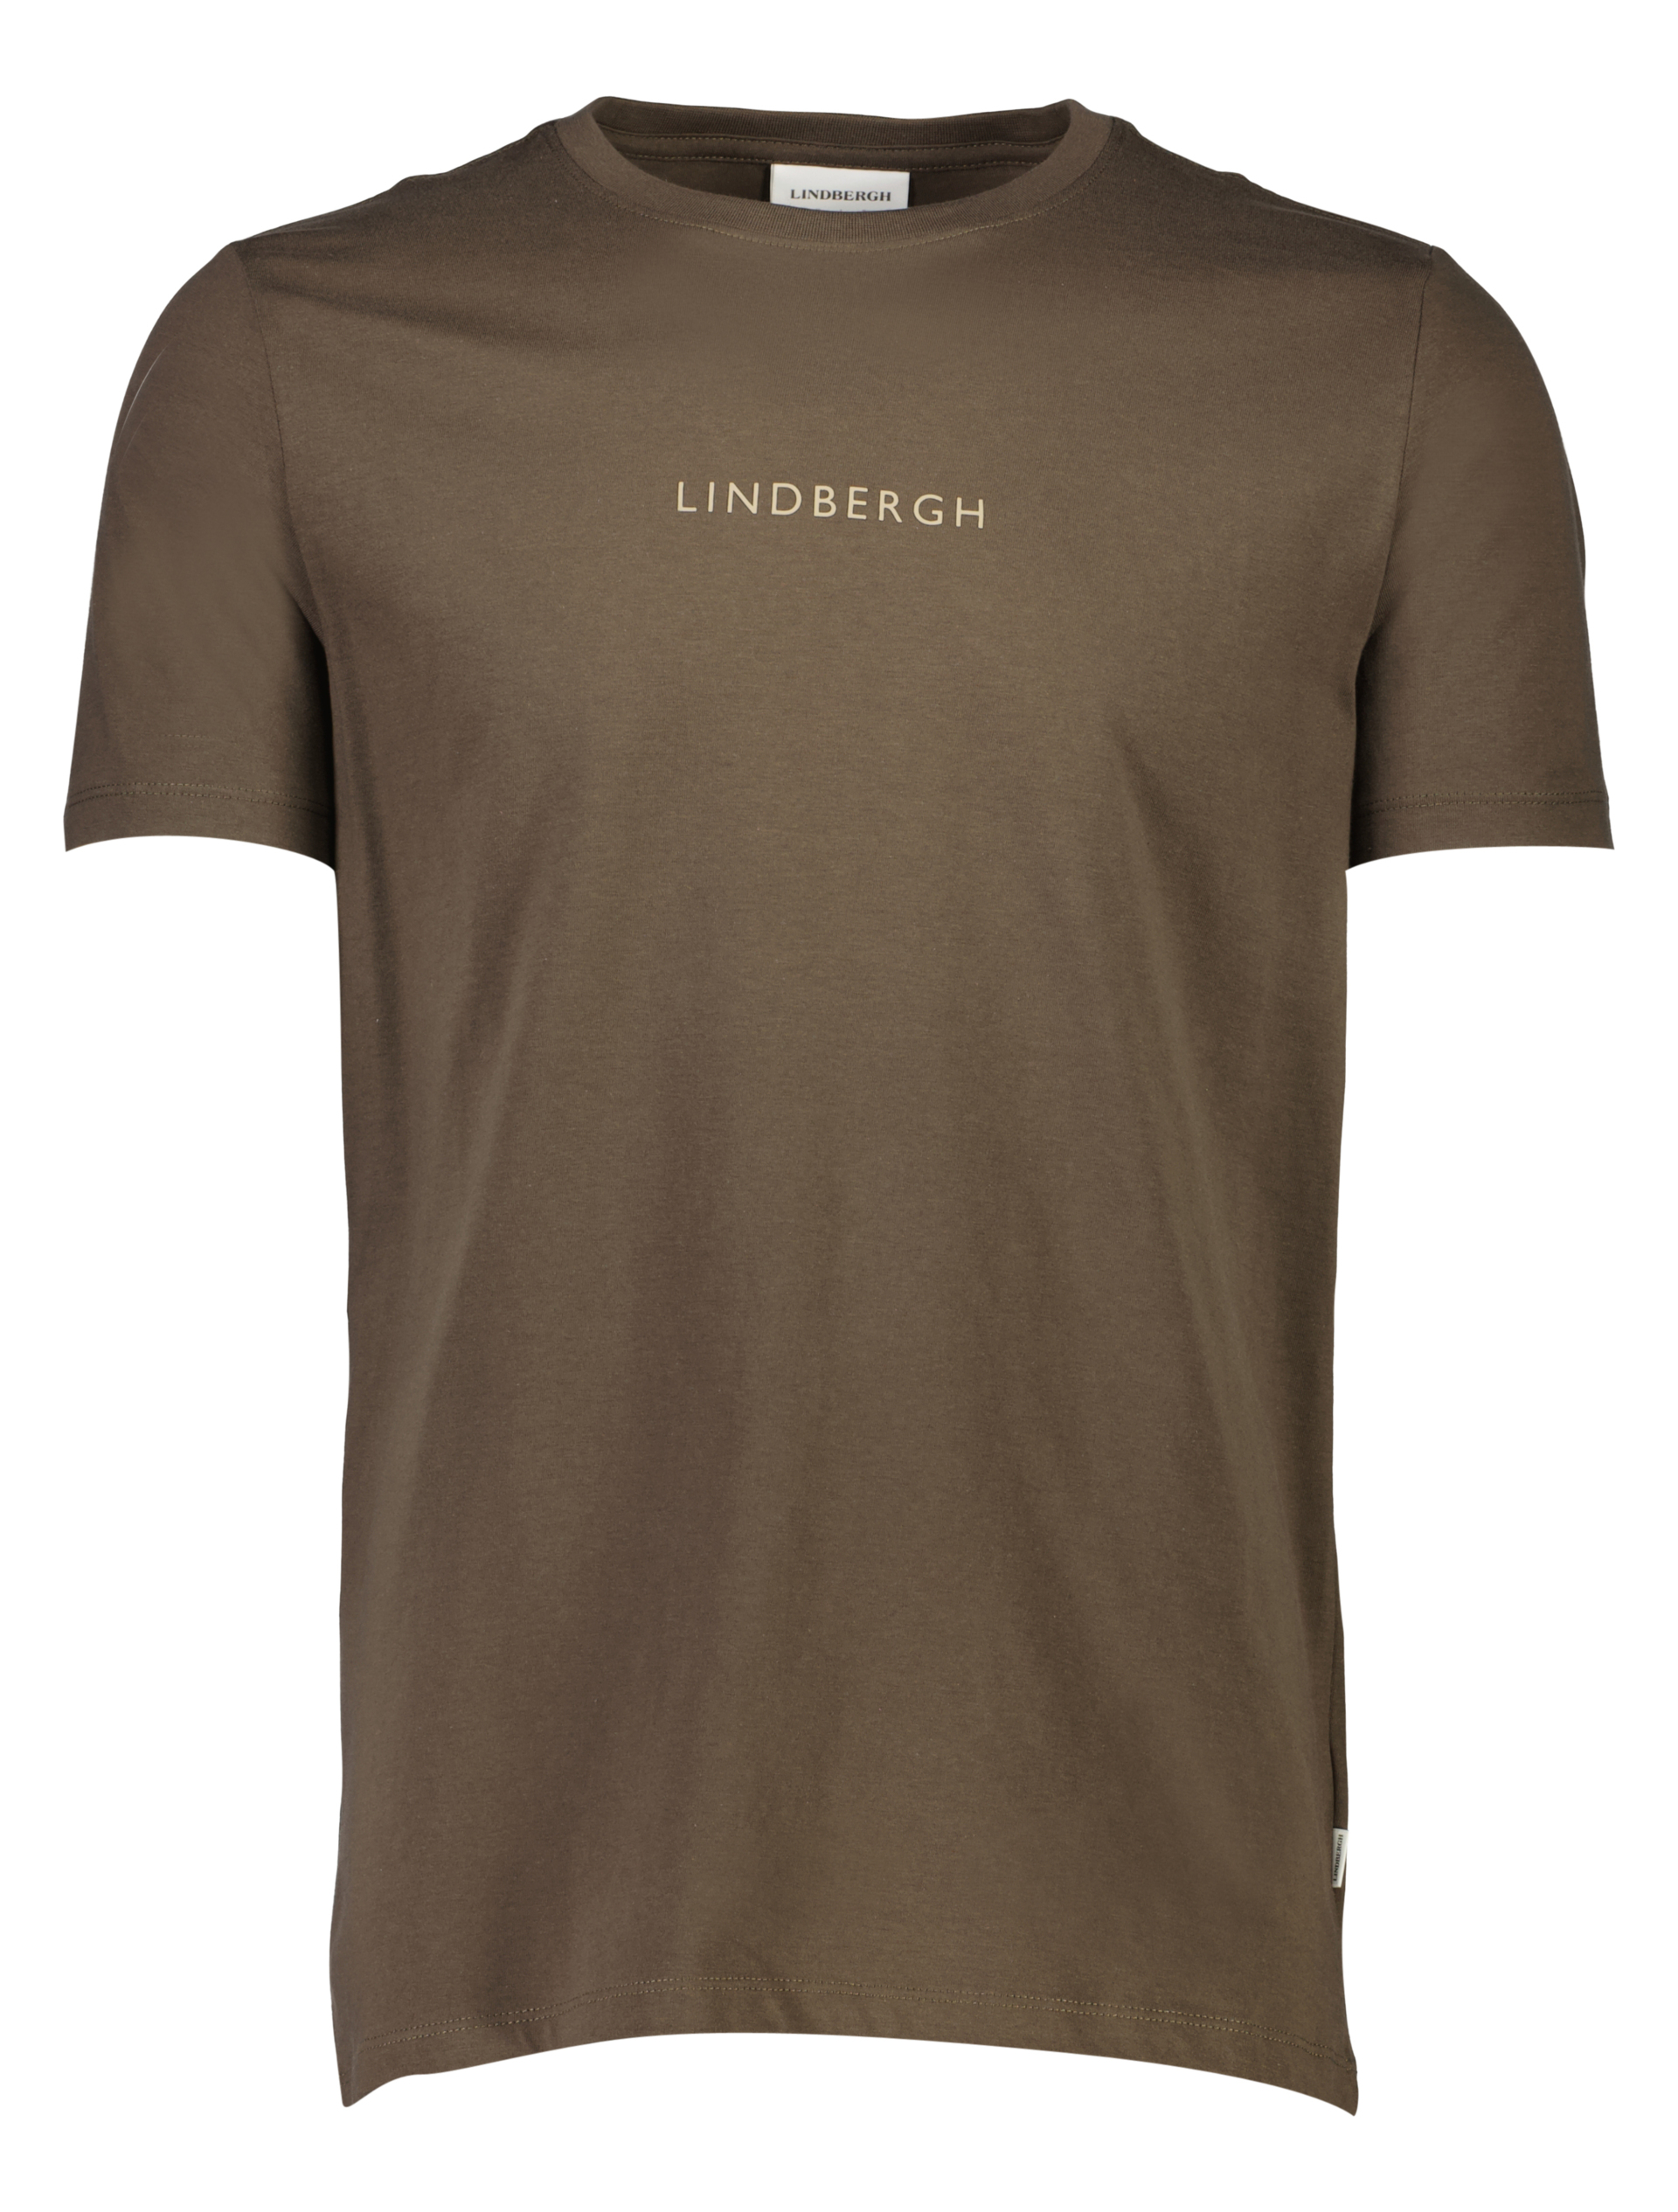 Lindbergh T-shirt grau / deep stone